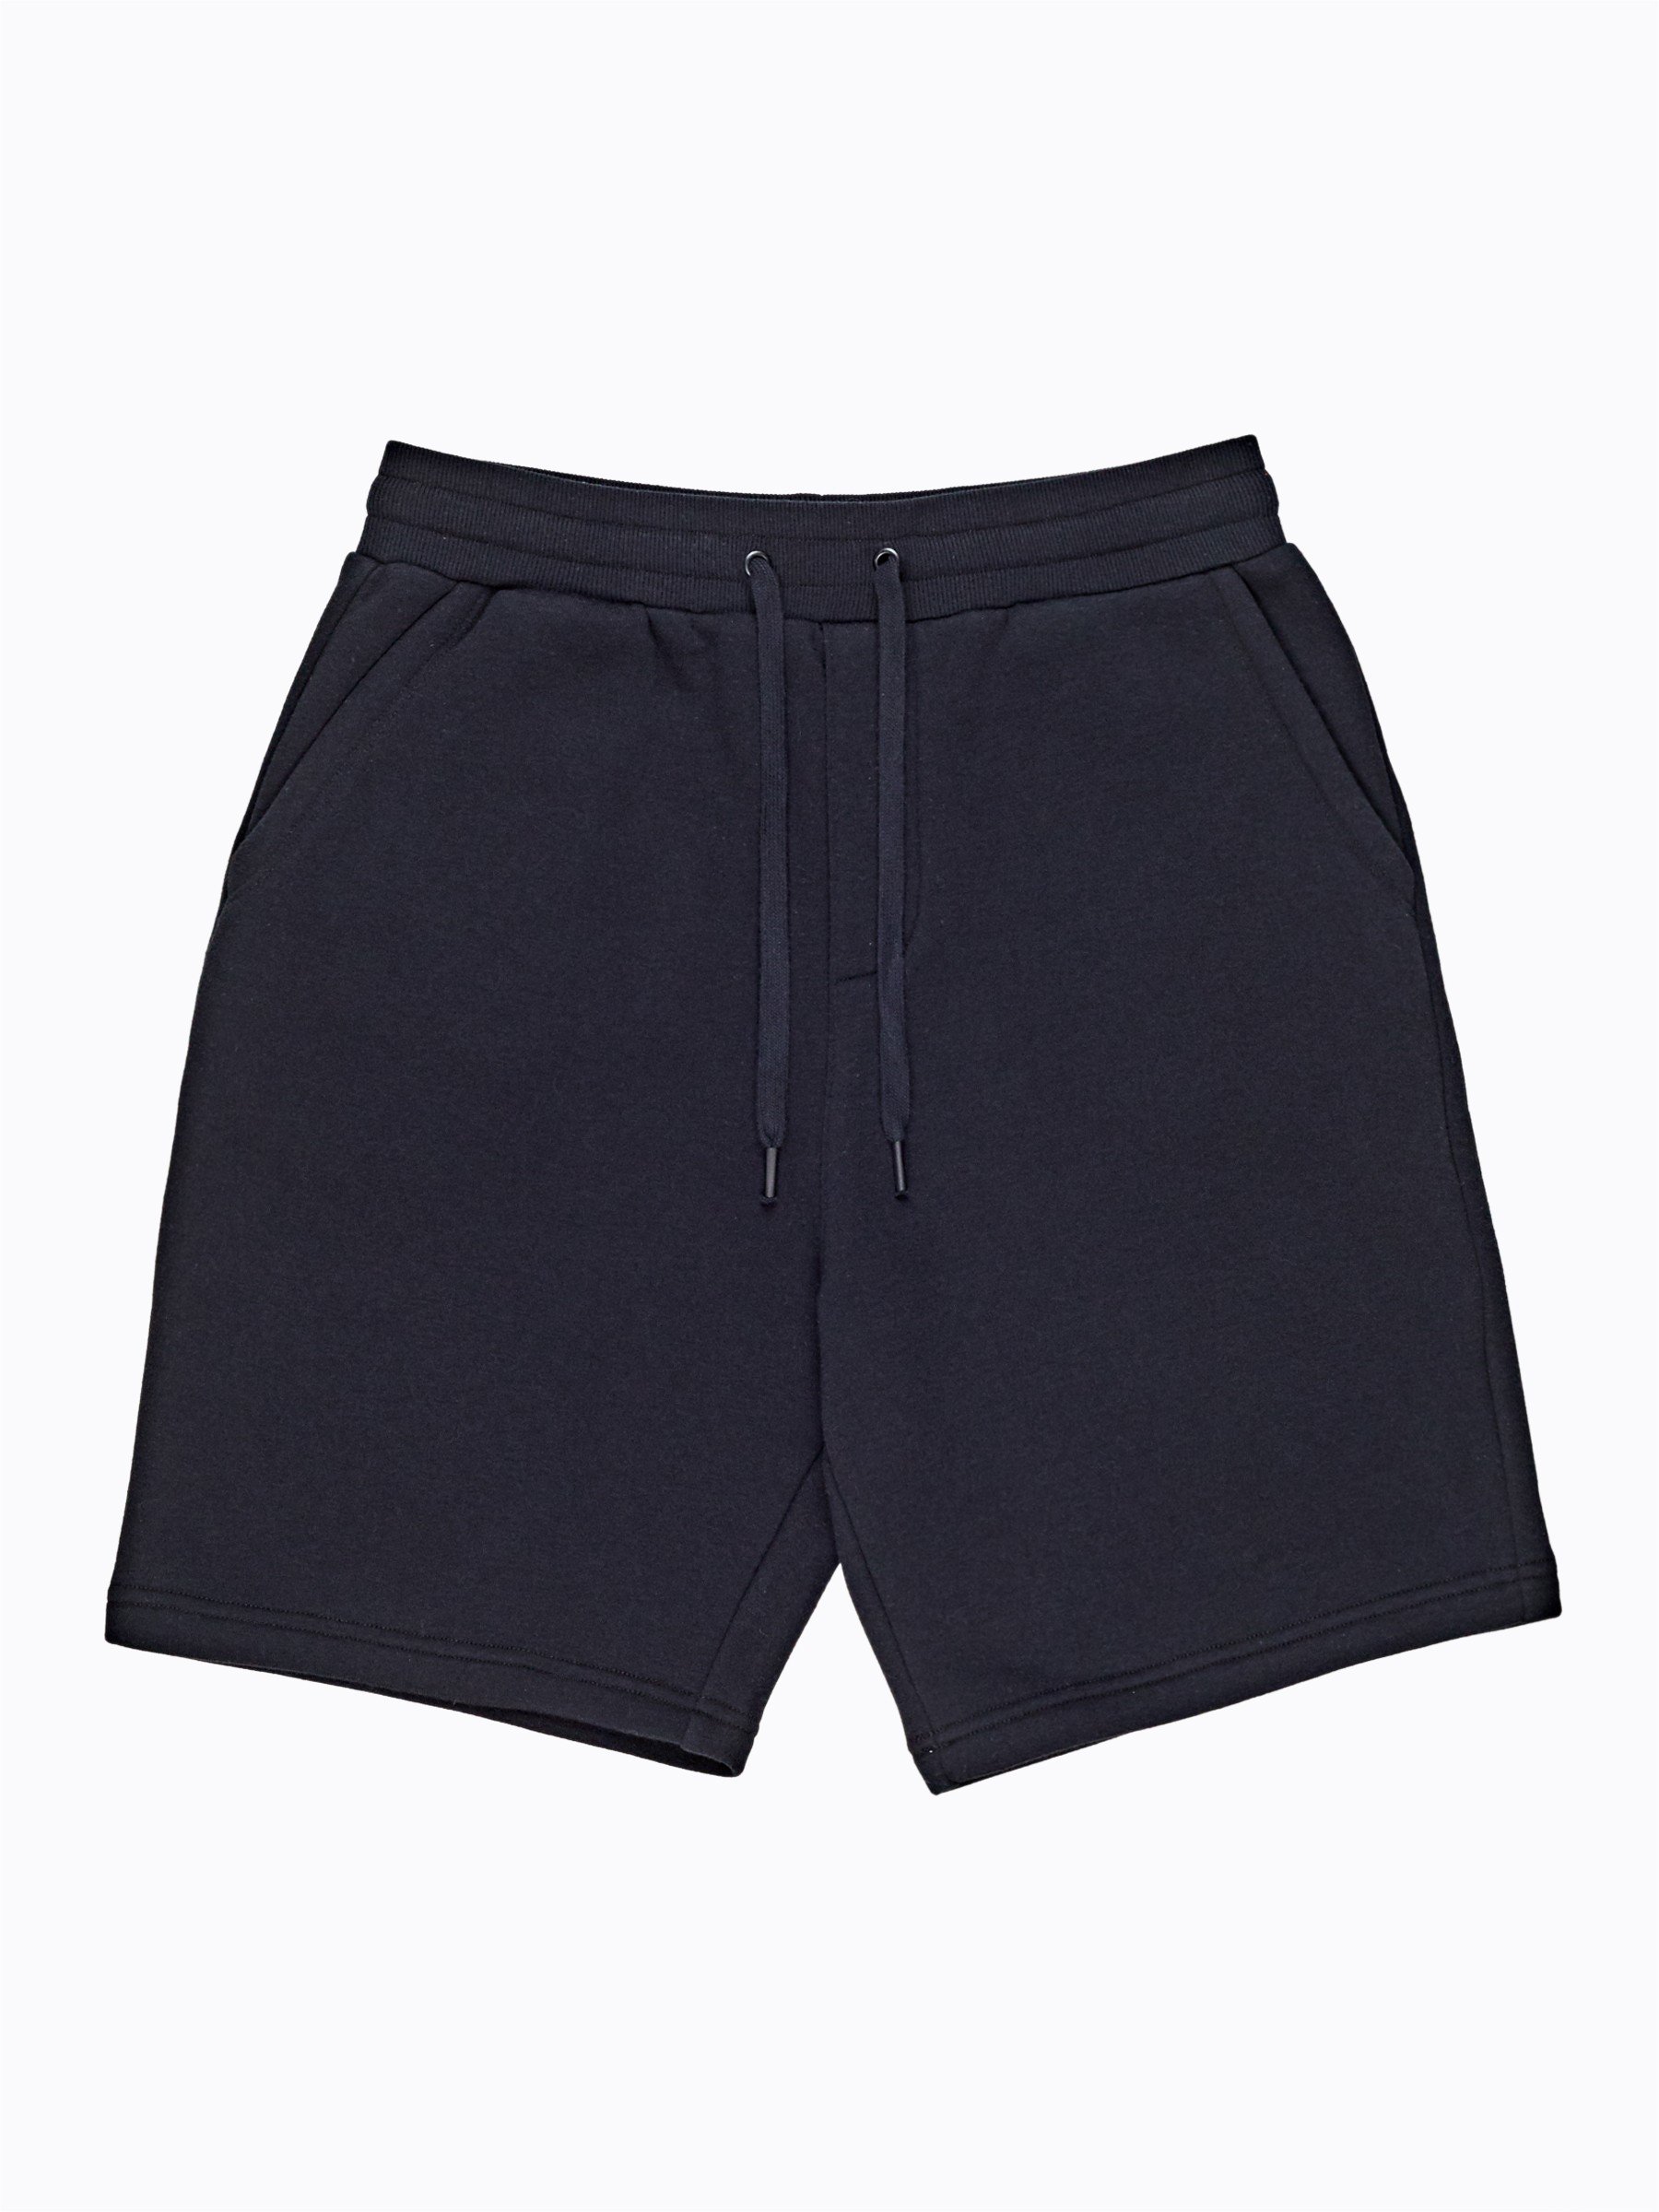 Buy > basic sweat shorts > in stock